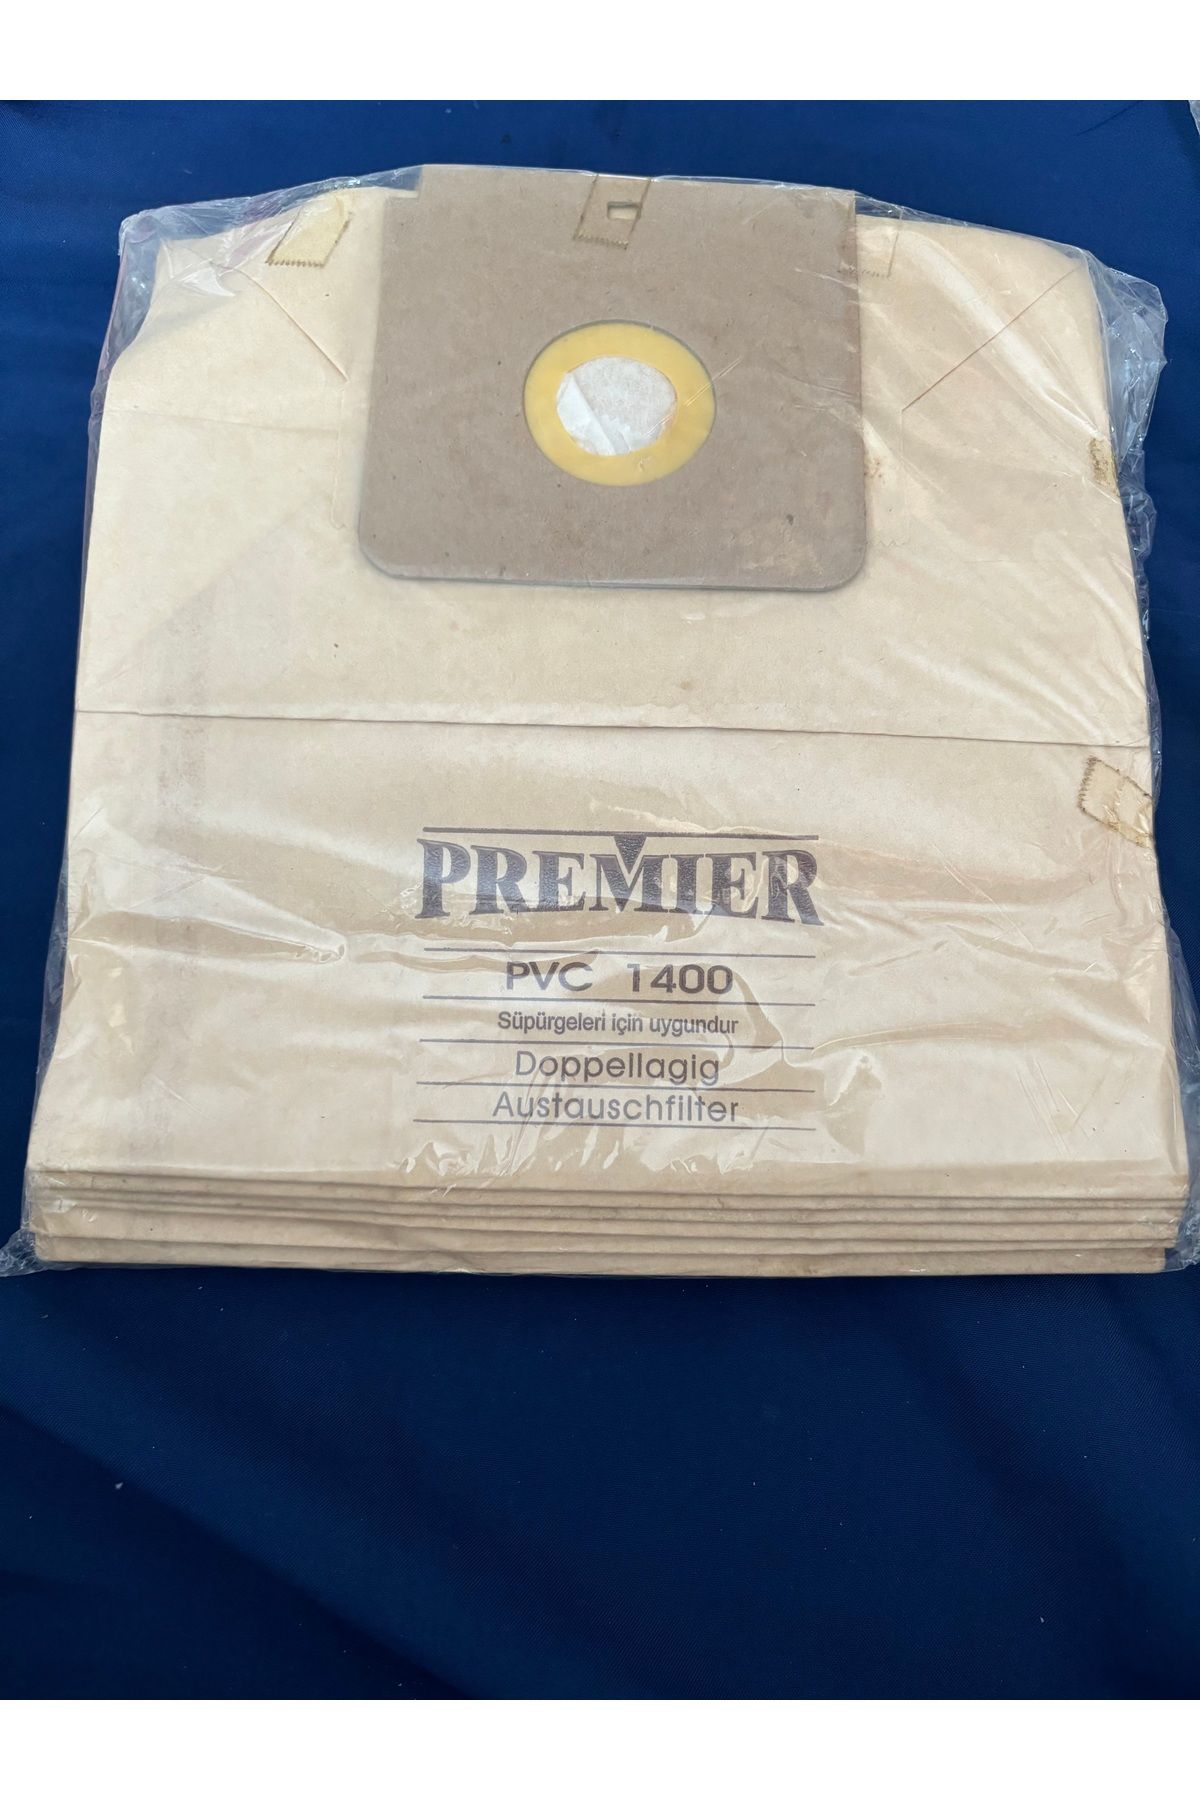 PREMIER Premıer PVC 1400 Eski Makine Kağıt Torba 3 Adet Uyumlu